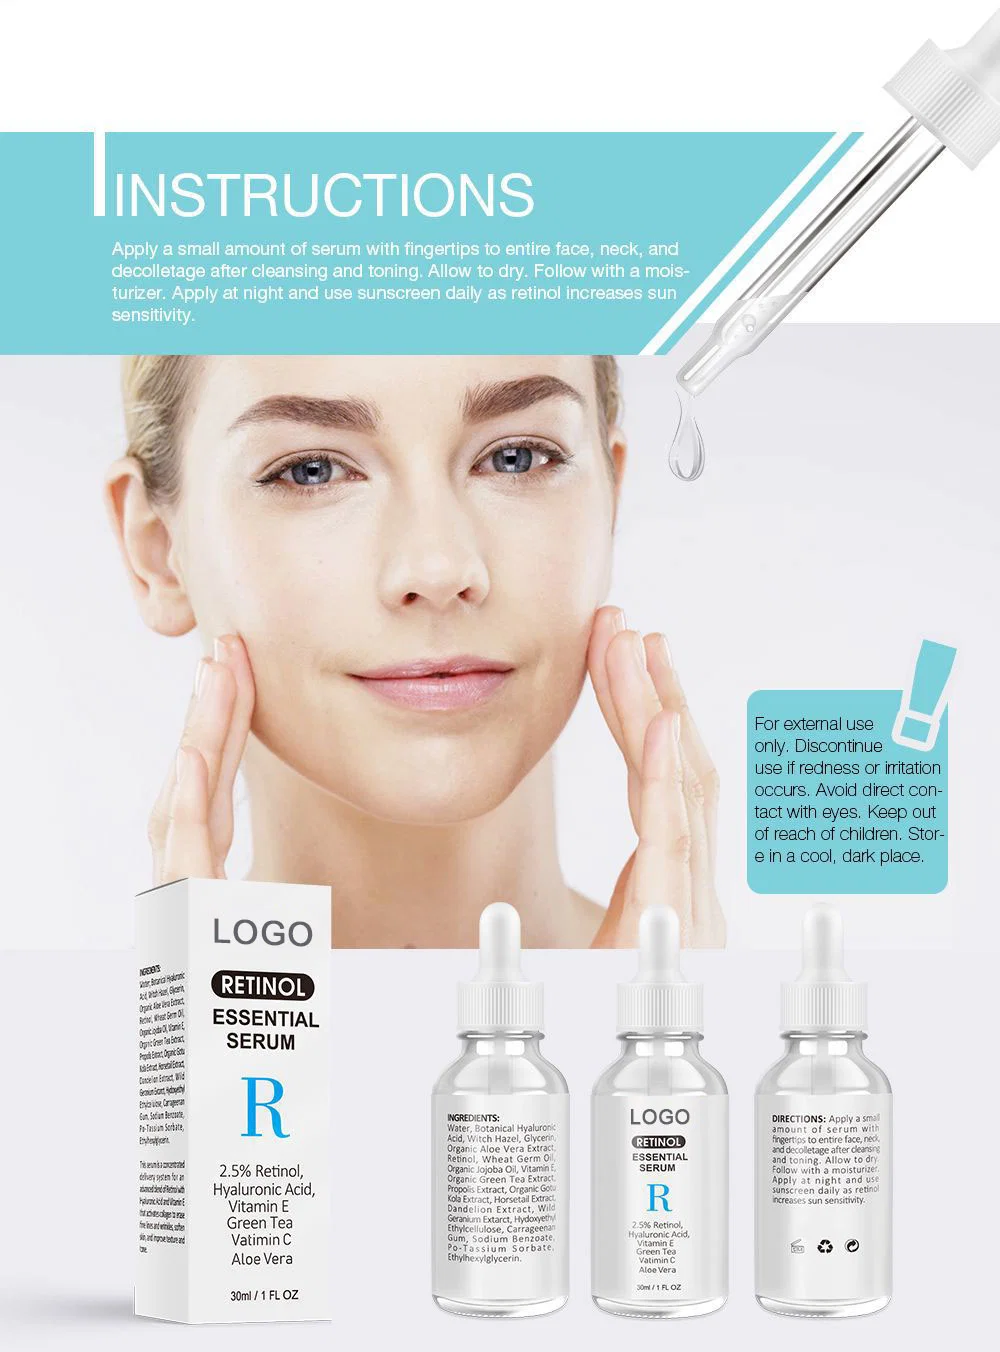 Beauty Cosmetics Skin Care Anti-Aging Moisturizer Whitening Vatimin C Retinol Essential Serum